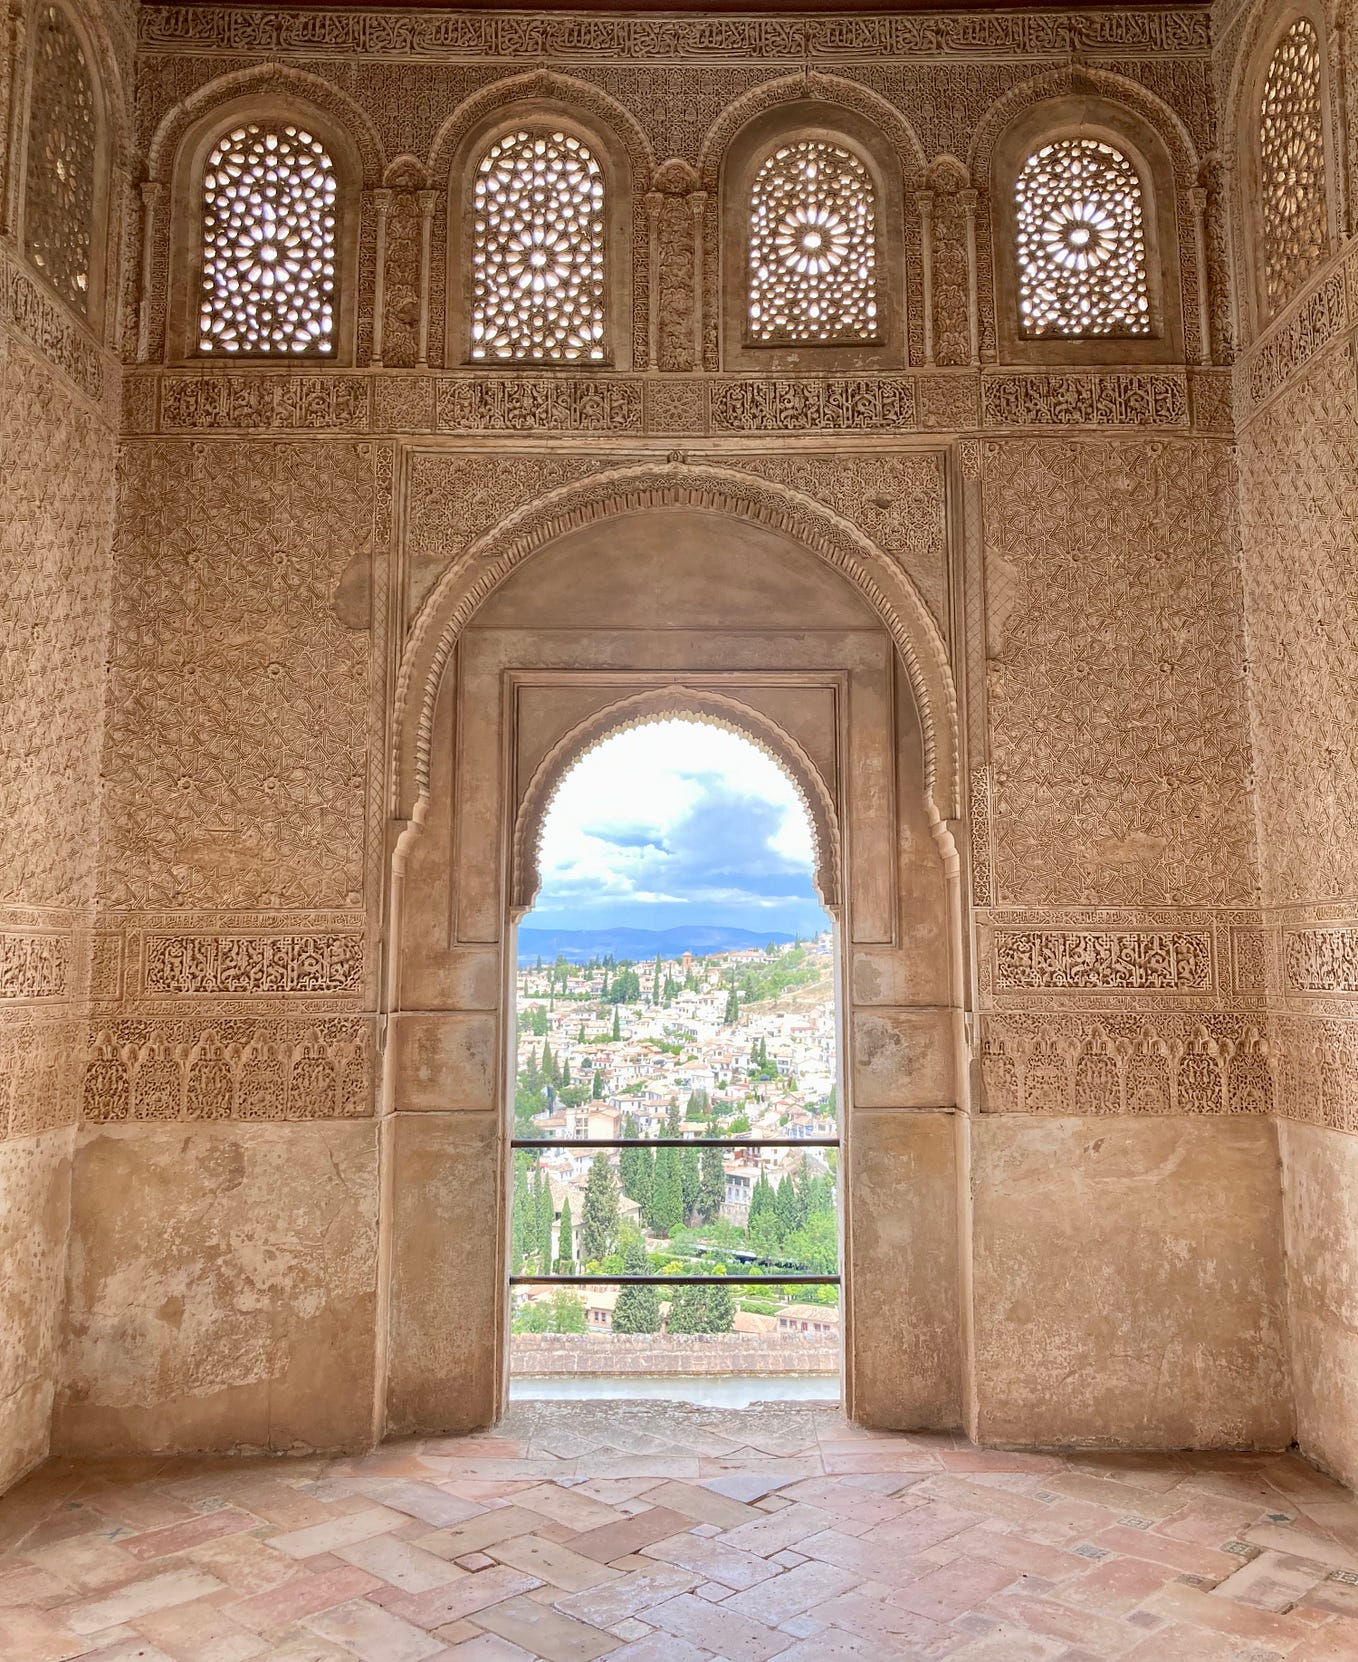 The beautiful Alhambra in Granada, Spain